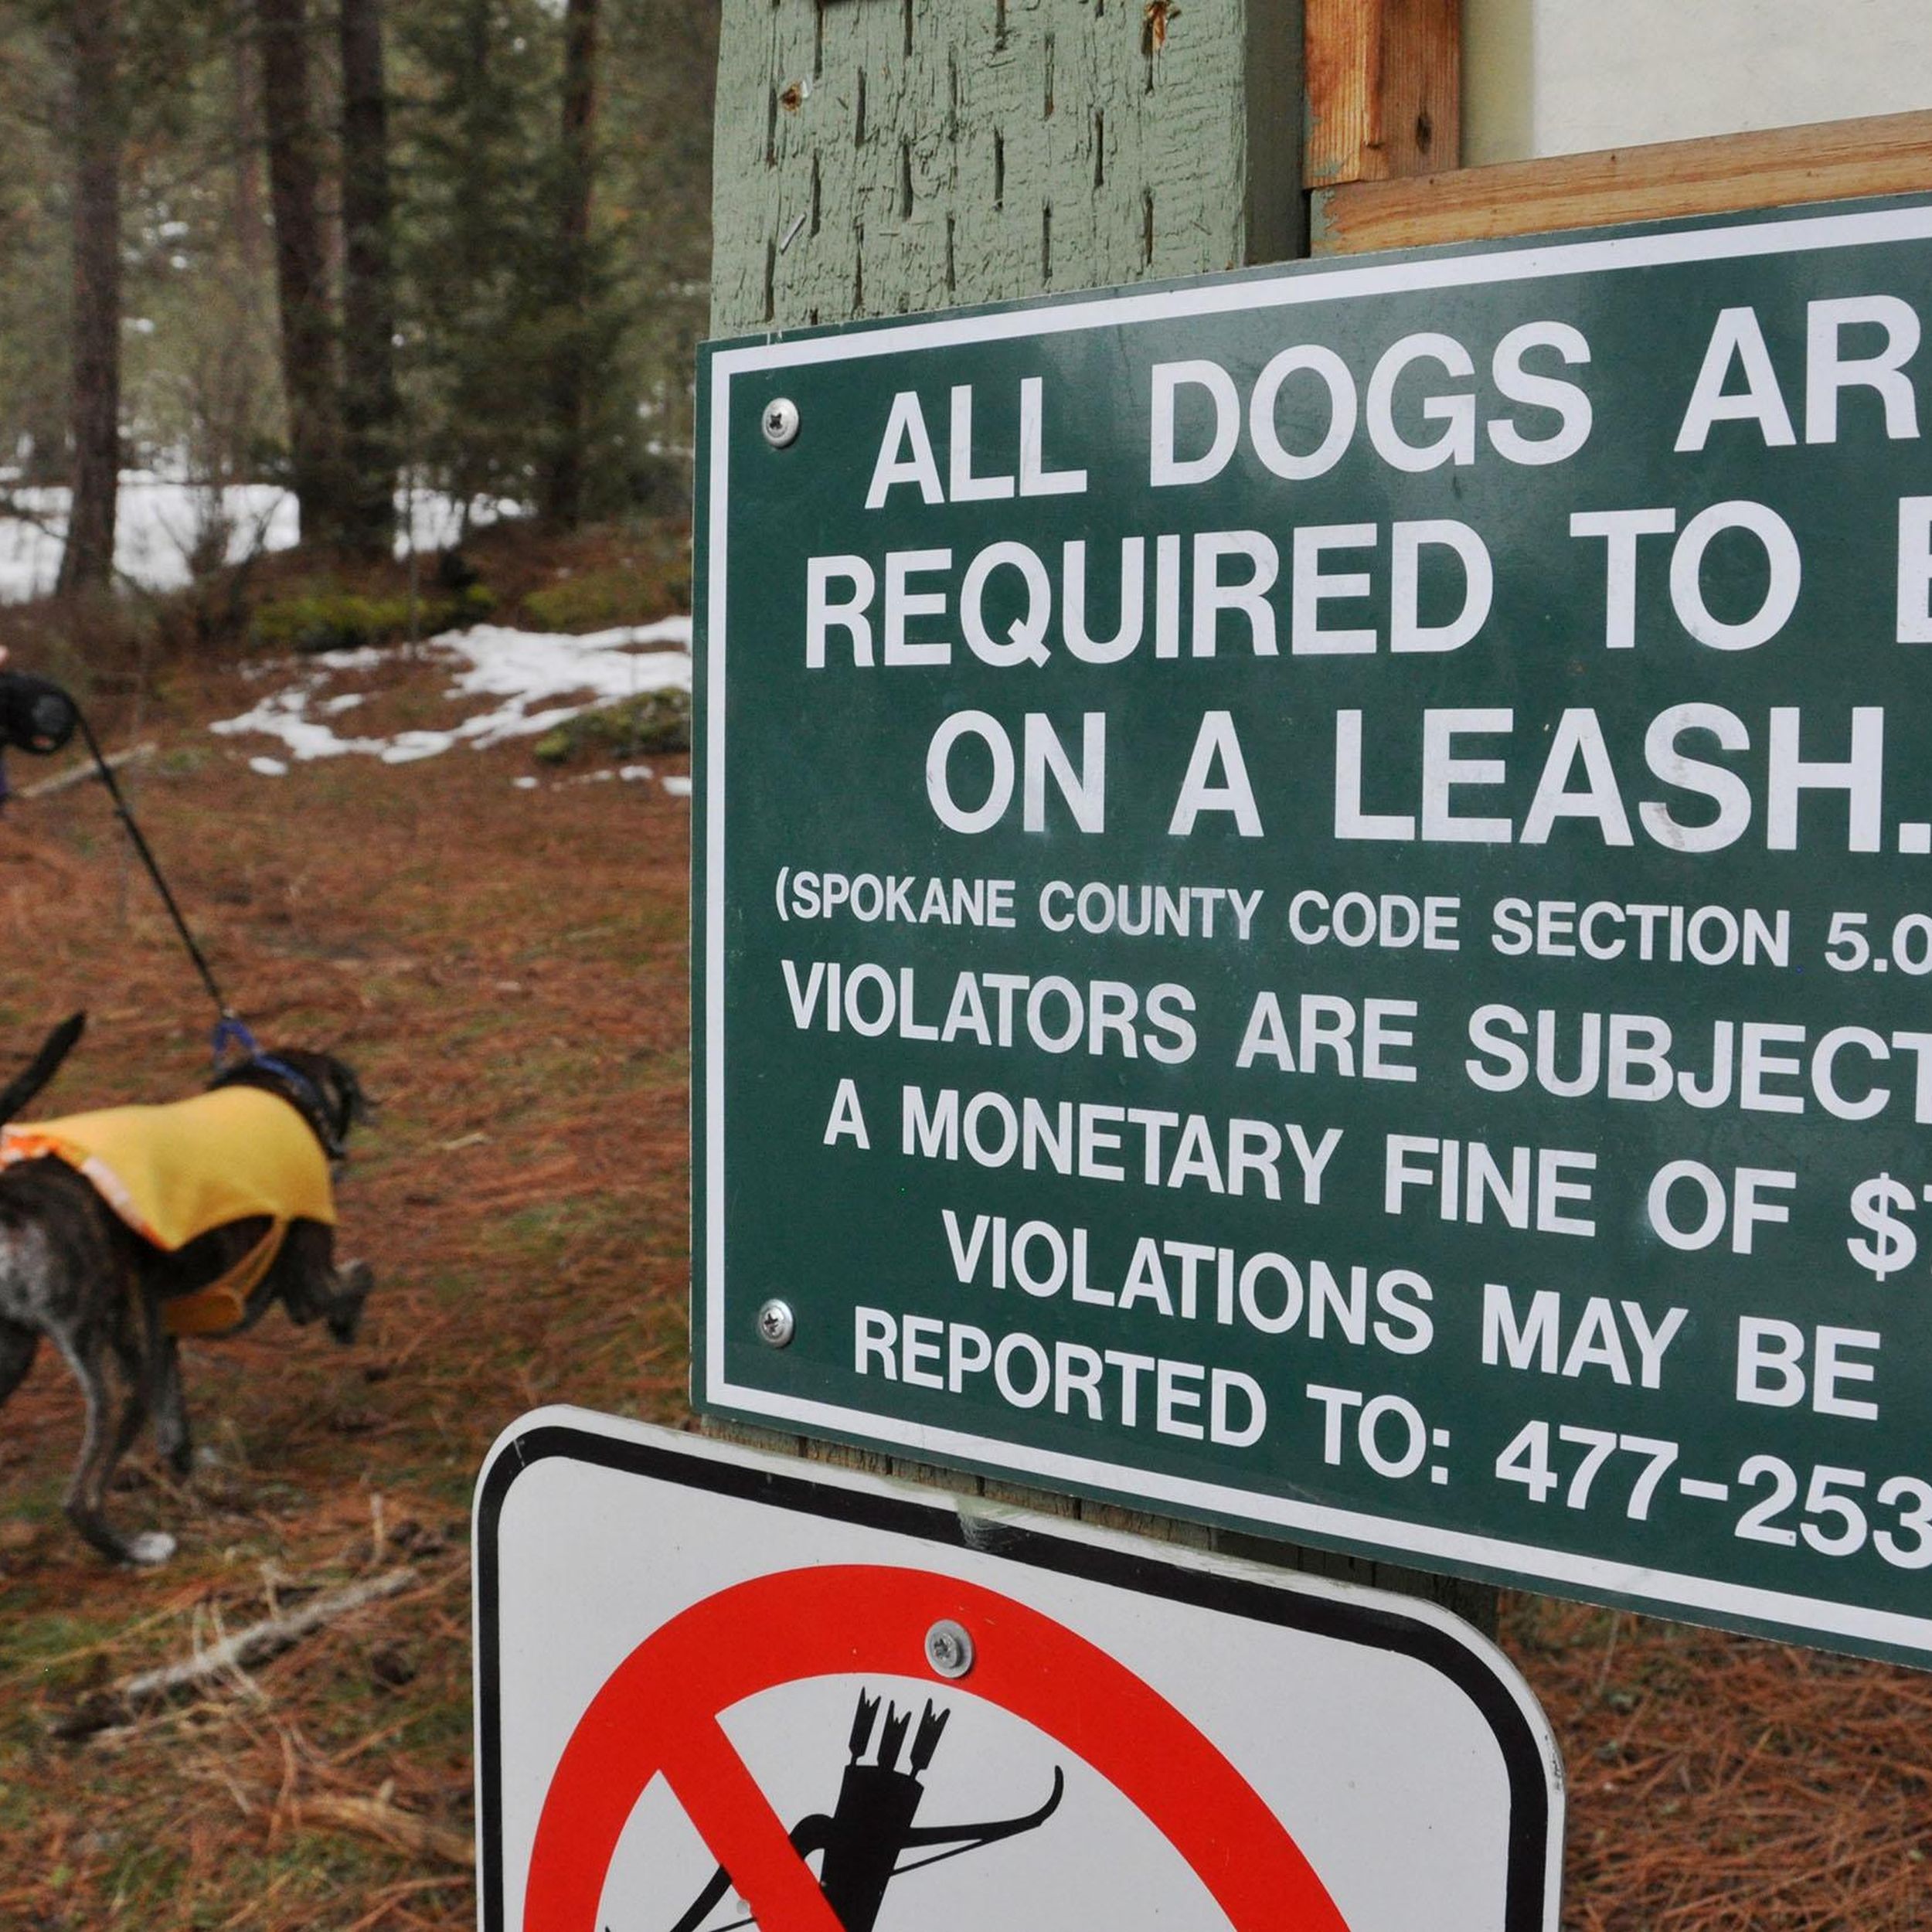 can dachshunds go off leash